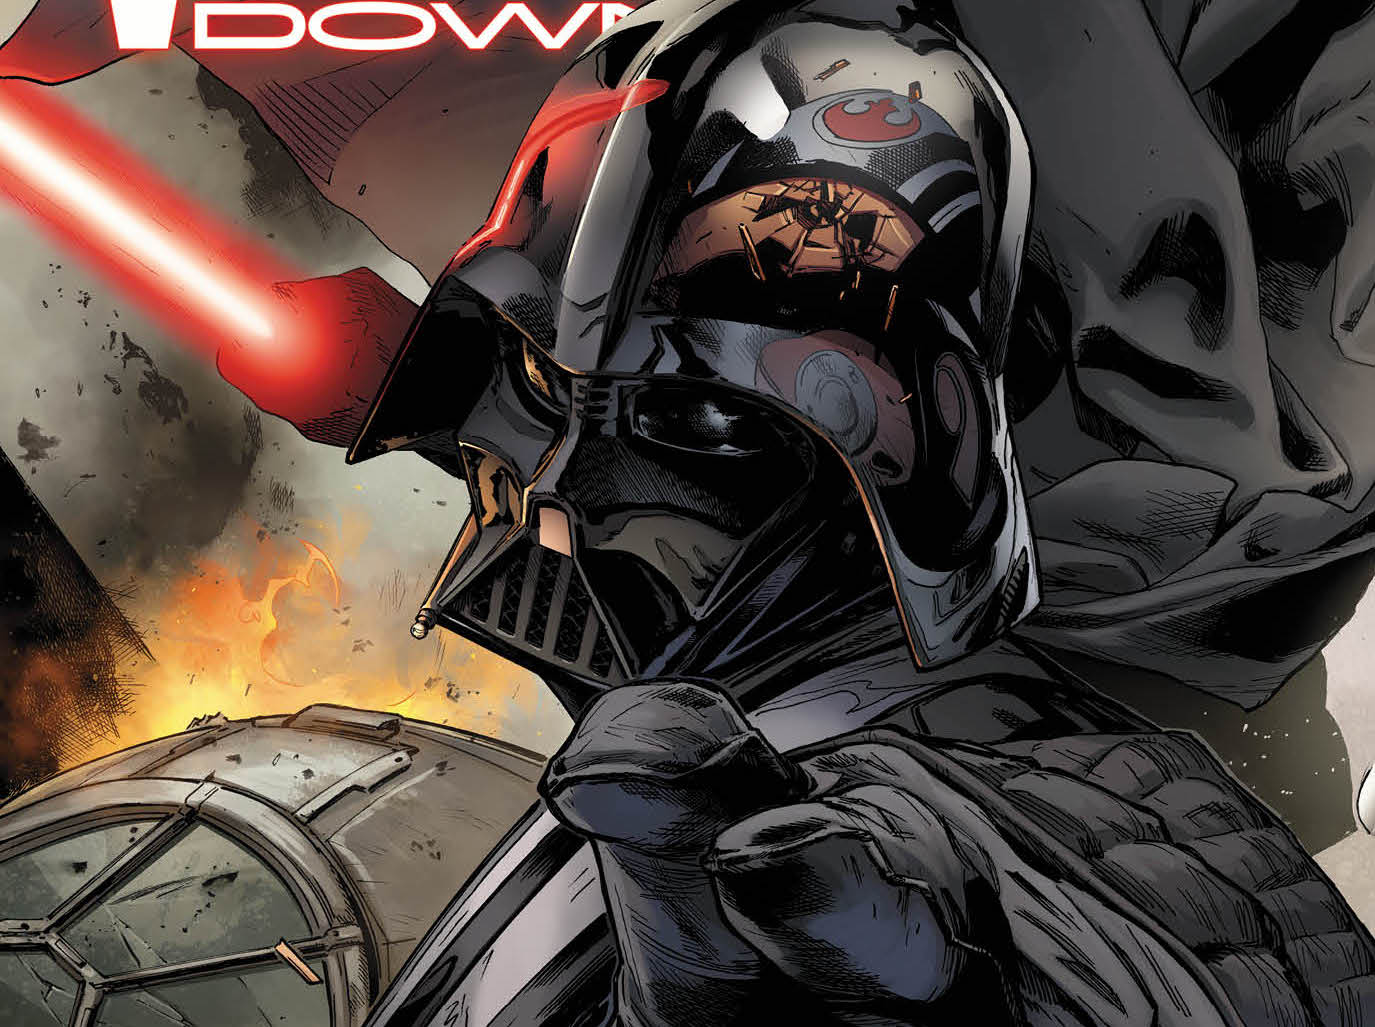 Star Wars: Vader Down #1 Review